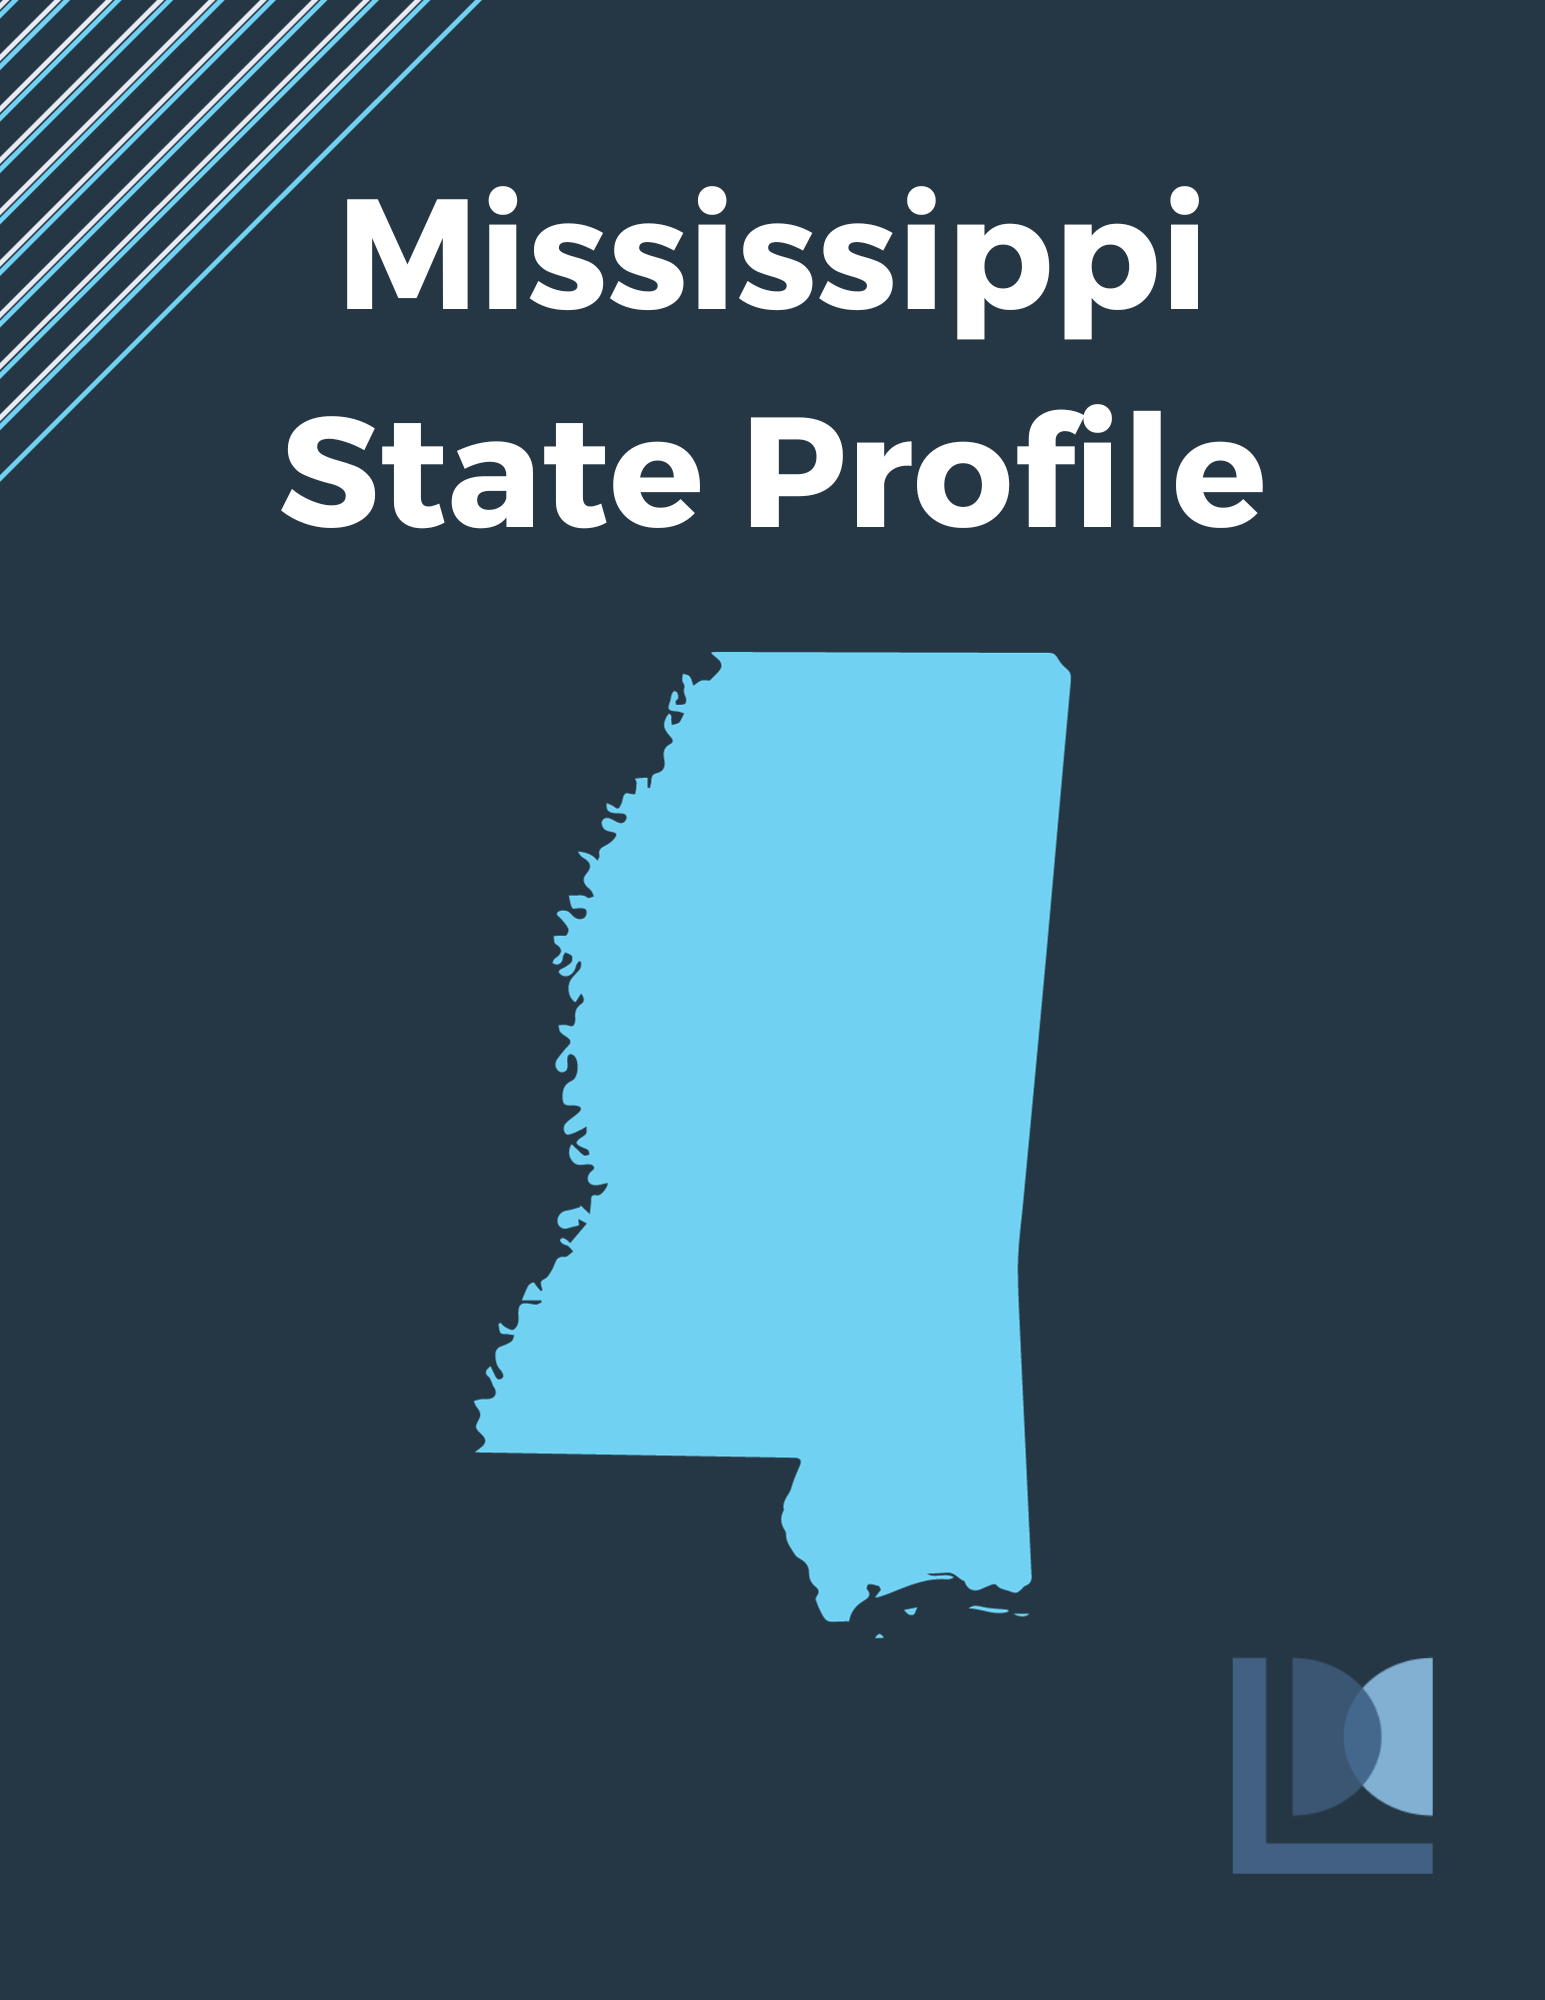 Mississippi State Profile (Copy)